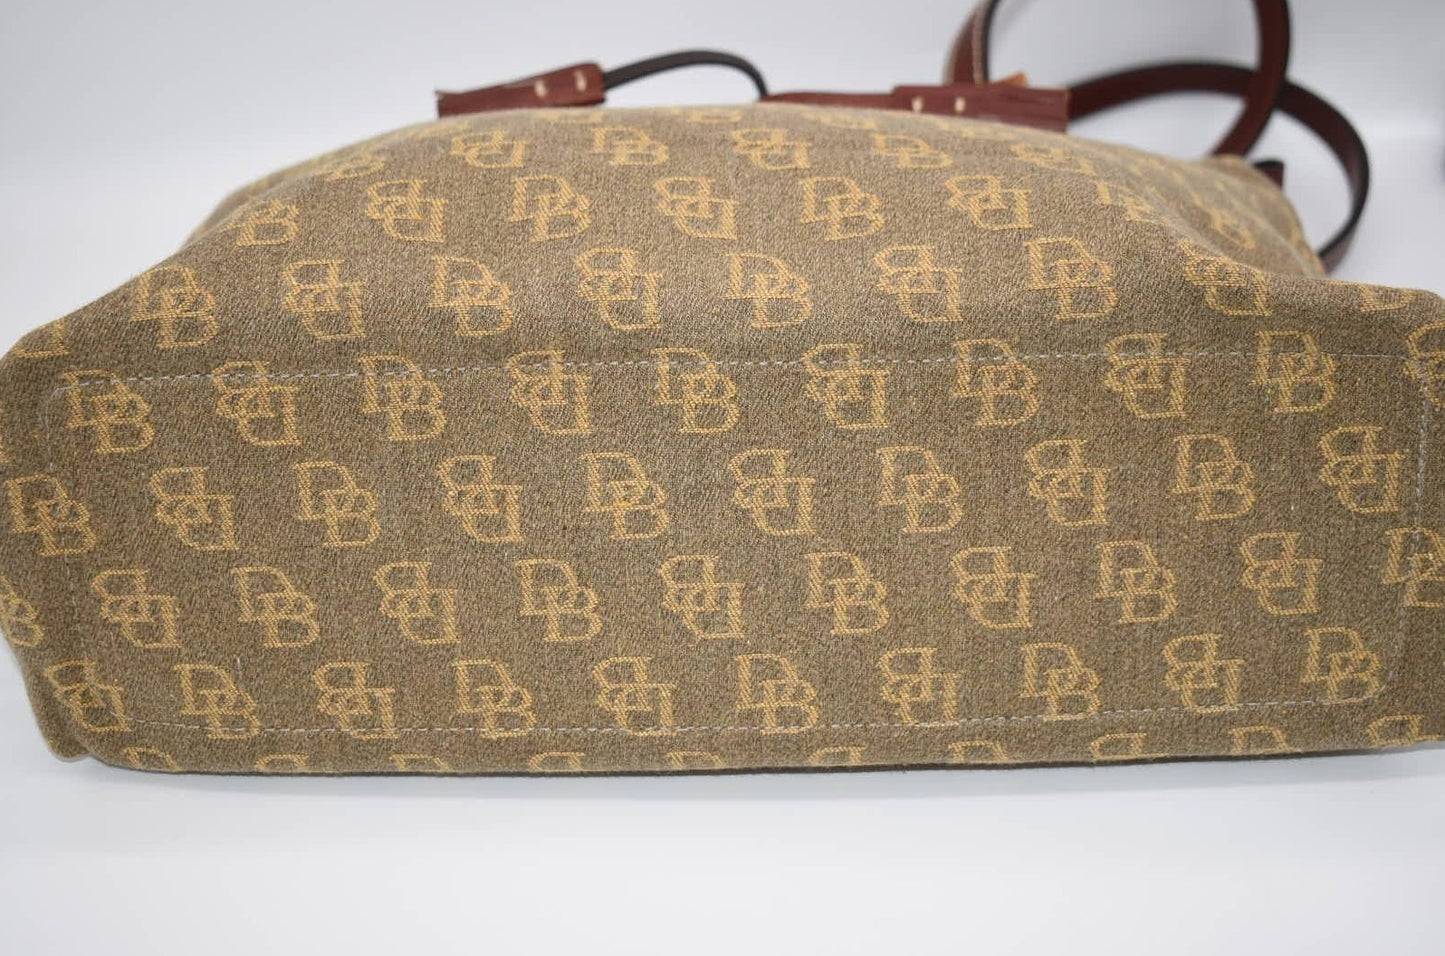 Dooney & Bourke Signature Leather/Canvas Zip Top Tassel Tote Bag